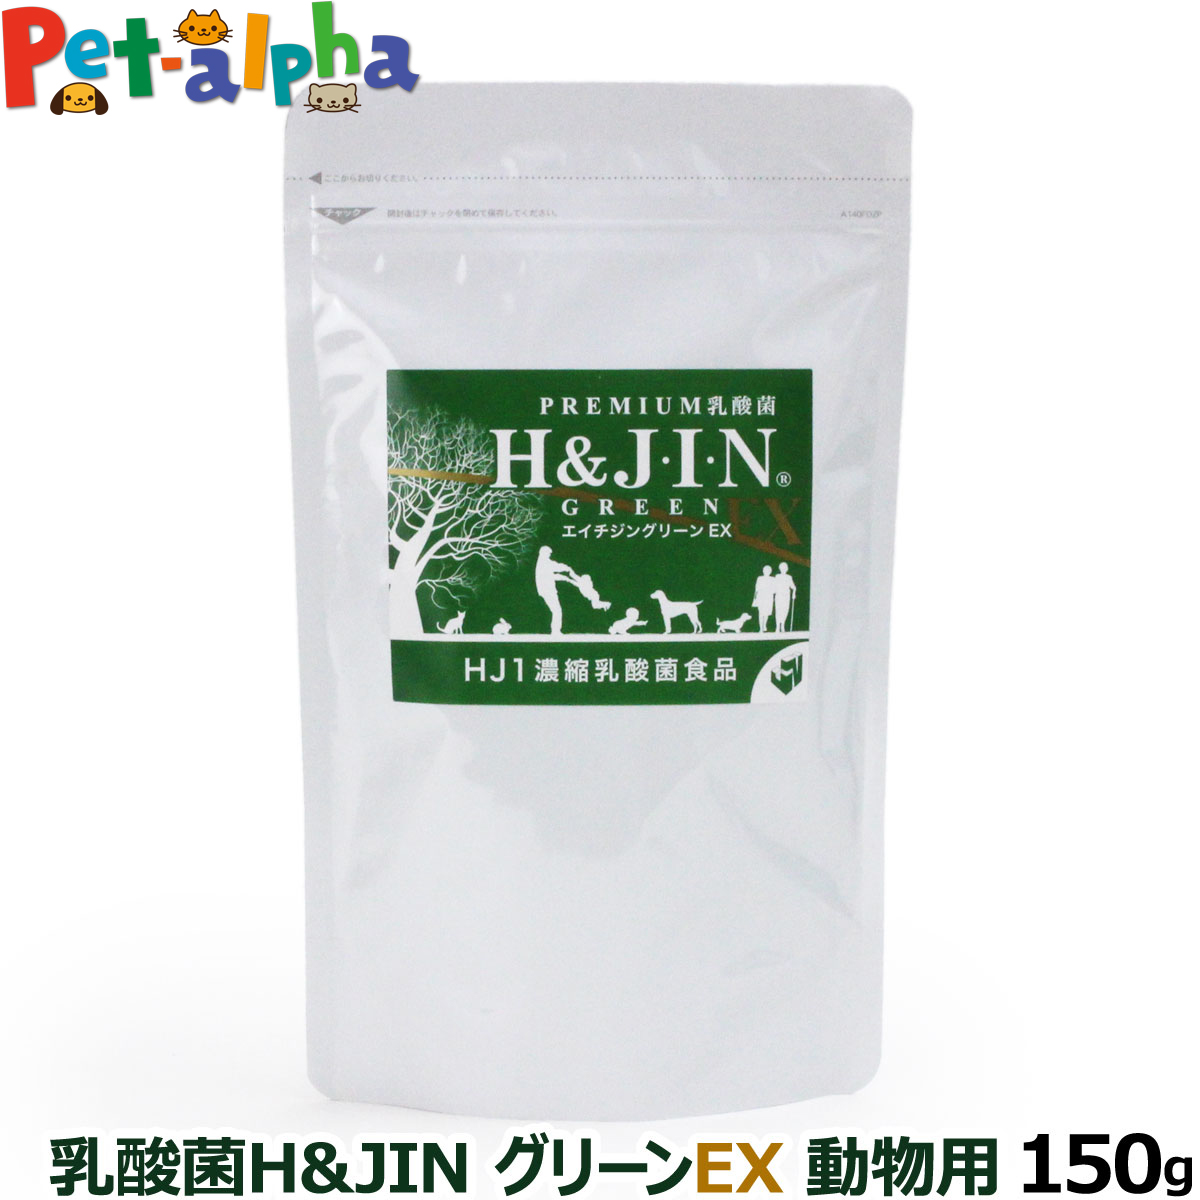 Premium乳酸菌H&JIN グリーンEX 動物用 150g(お取り寄せ)(乳酸菌 ペット 犬用 猫用 エイチジン 動物用 高品質乳酸菌 サプリ サプリメント) サプリメント